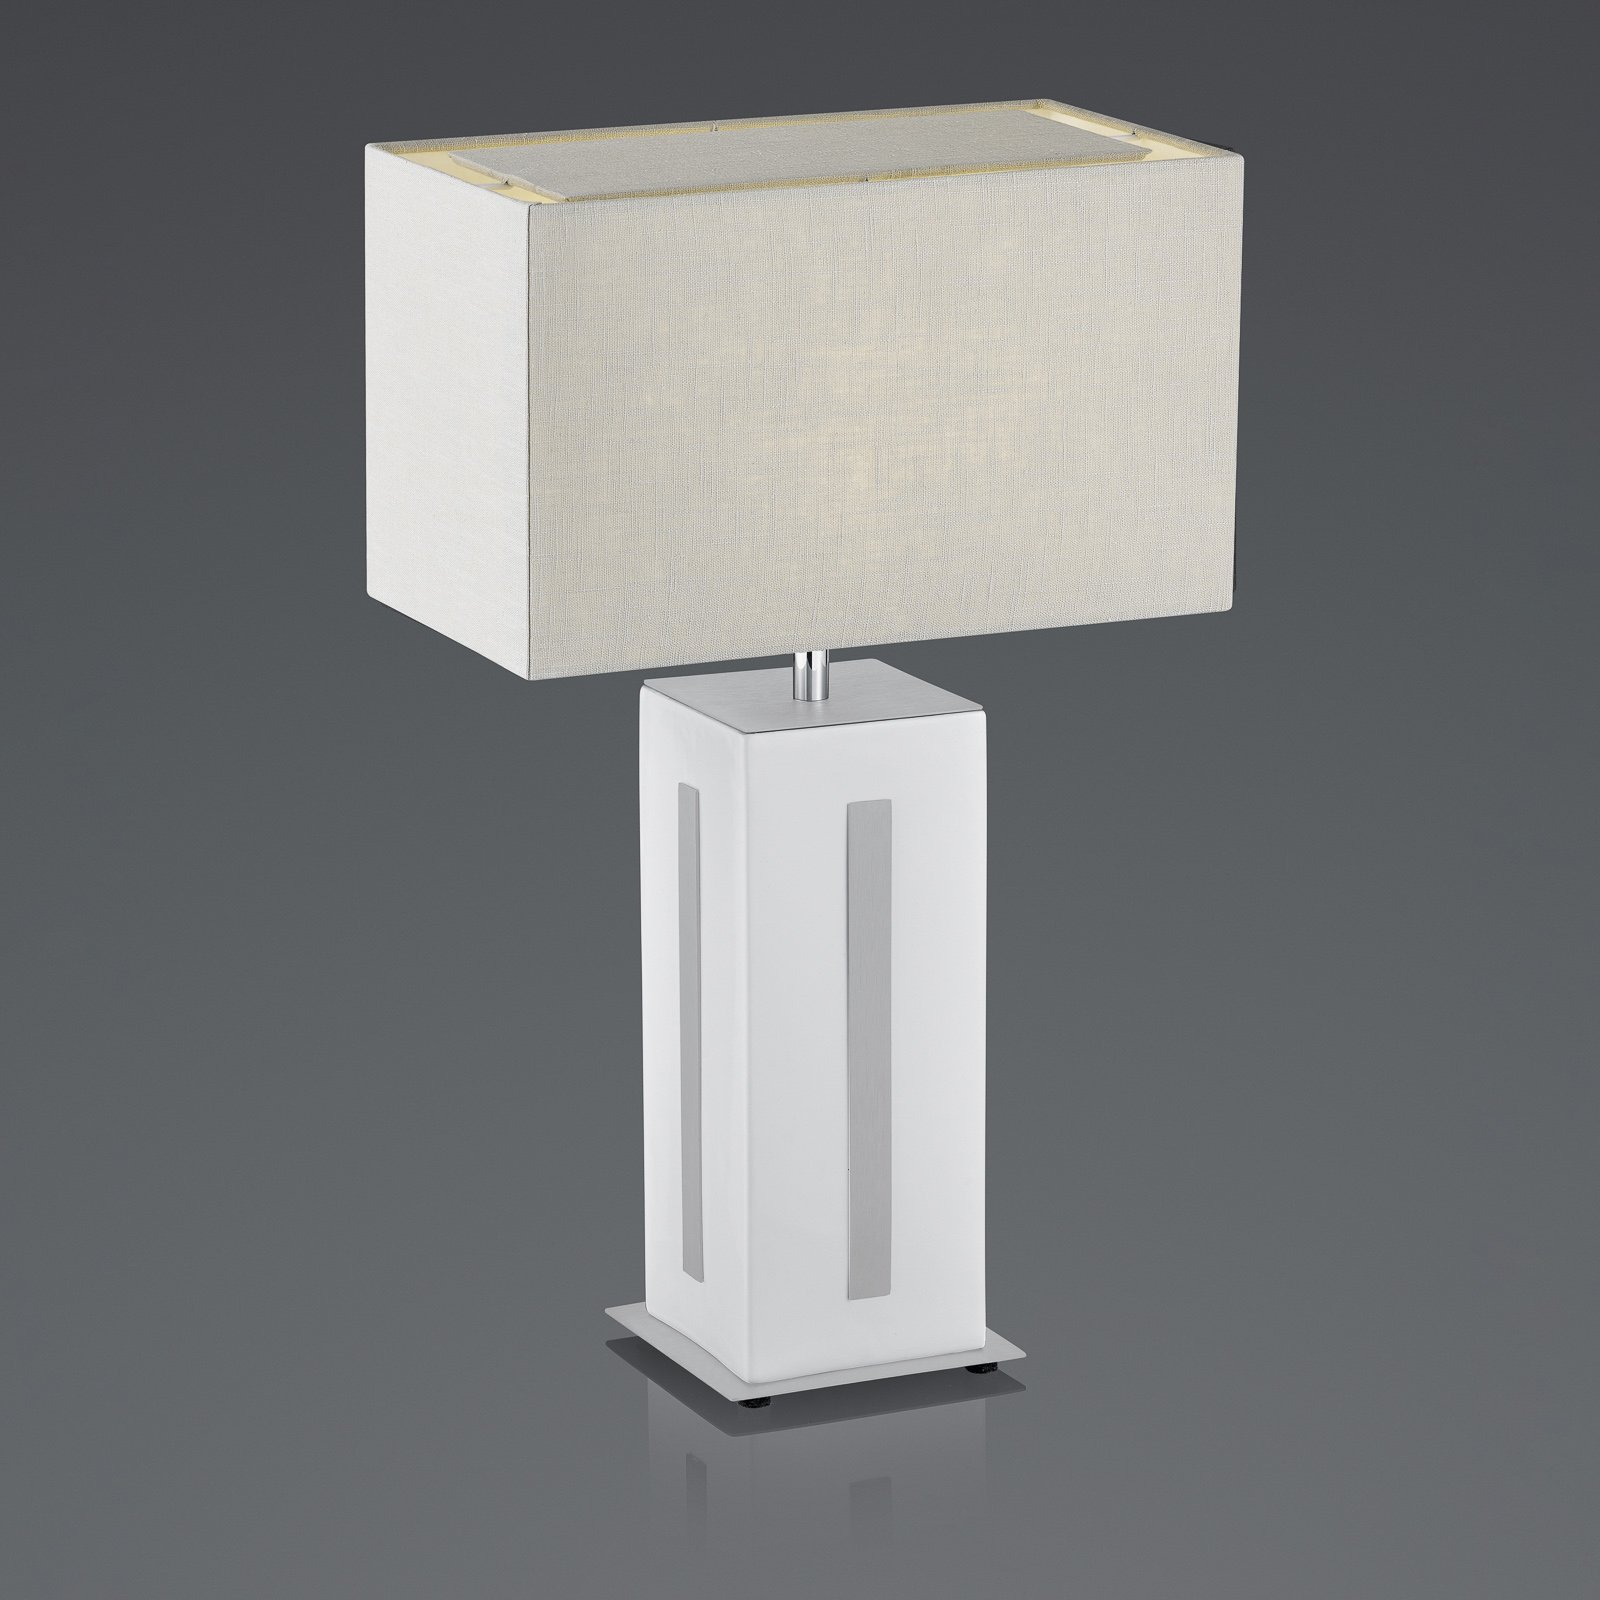 BANKAMP Karlo table lamp white/grey, height 56 cm